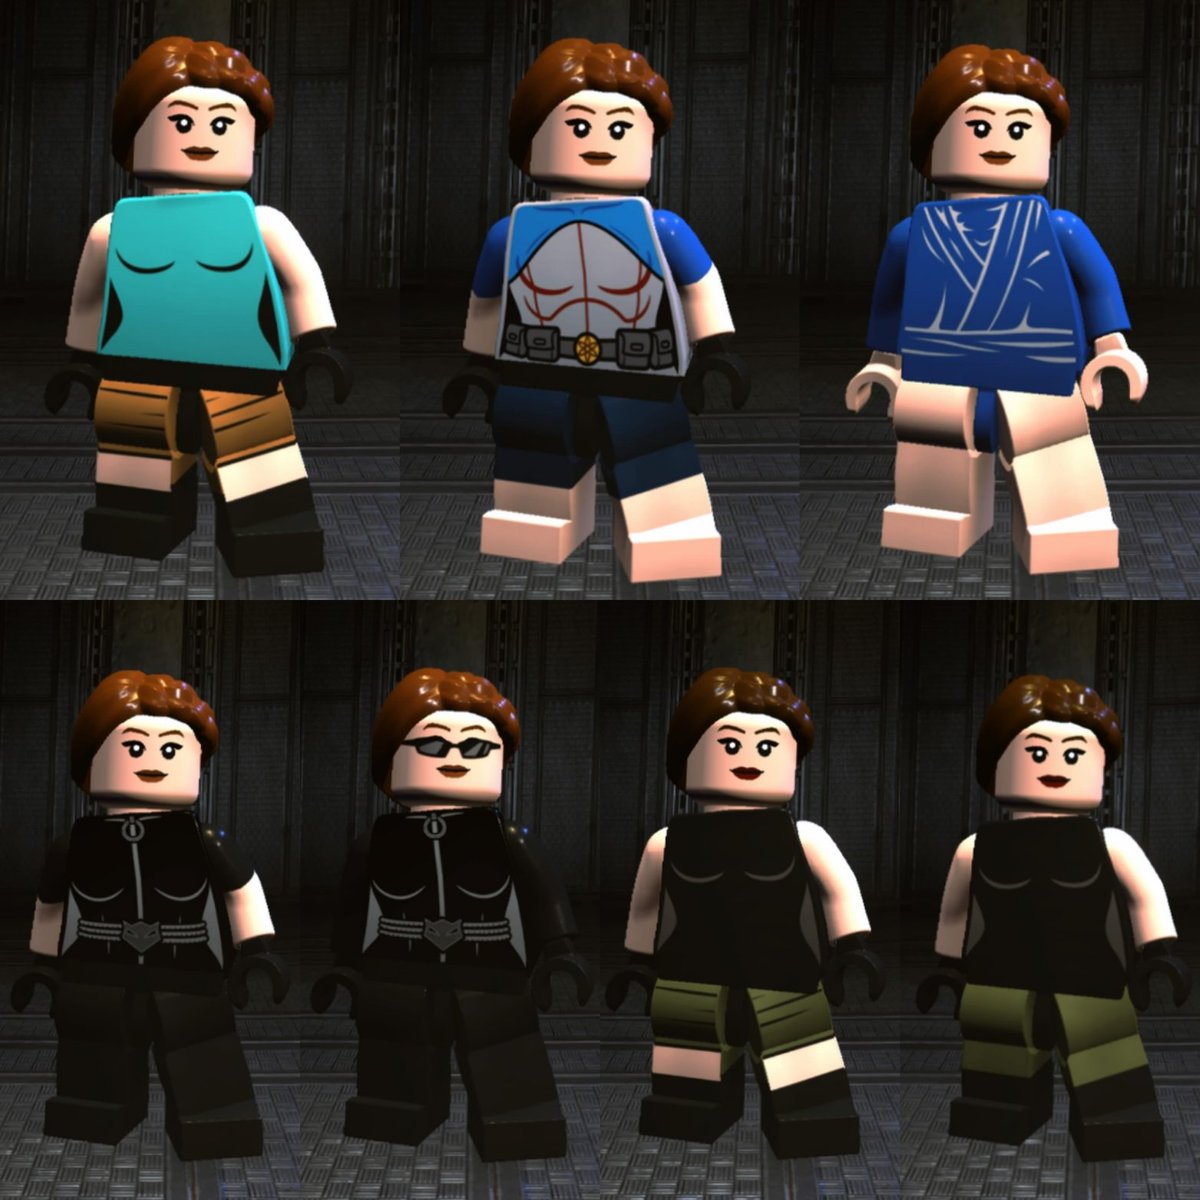 Larry Belmont Lokomotiv Uventet Ross on Twitter: "Some unlockable outfit options #TombRaider #LaraCroft # LEGO #LEGOTombRaider https://t.co/eoi4gmtTO8" / X